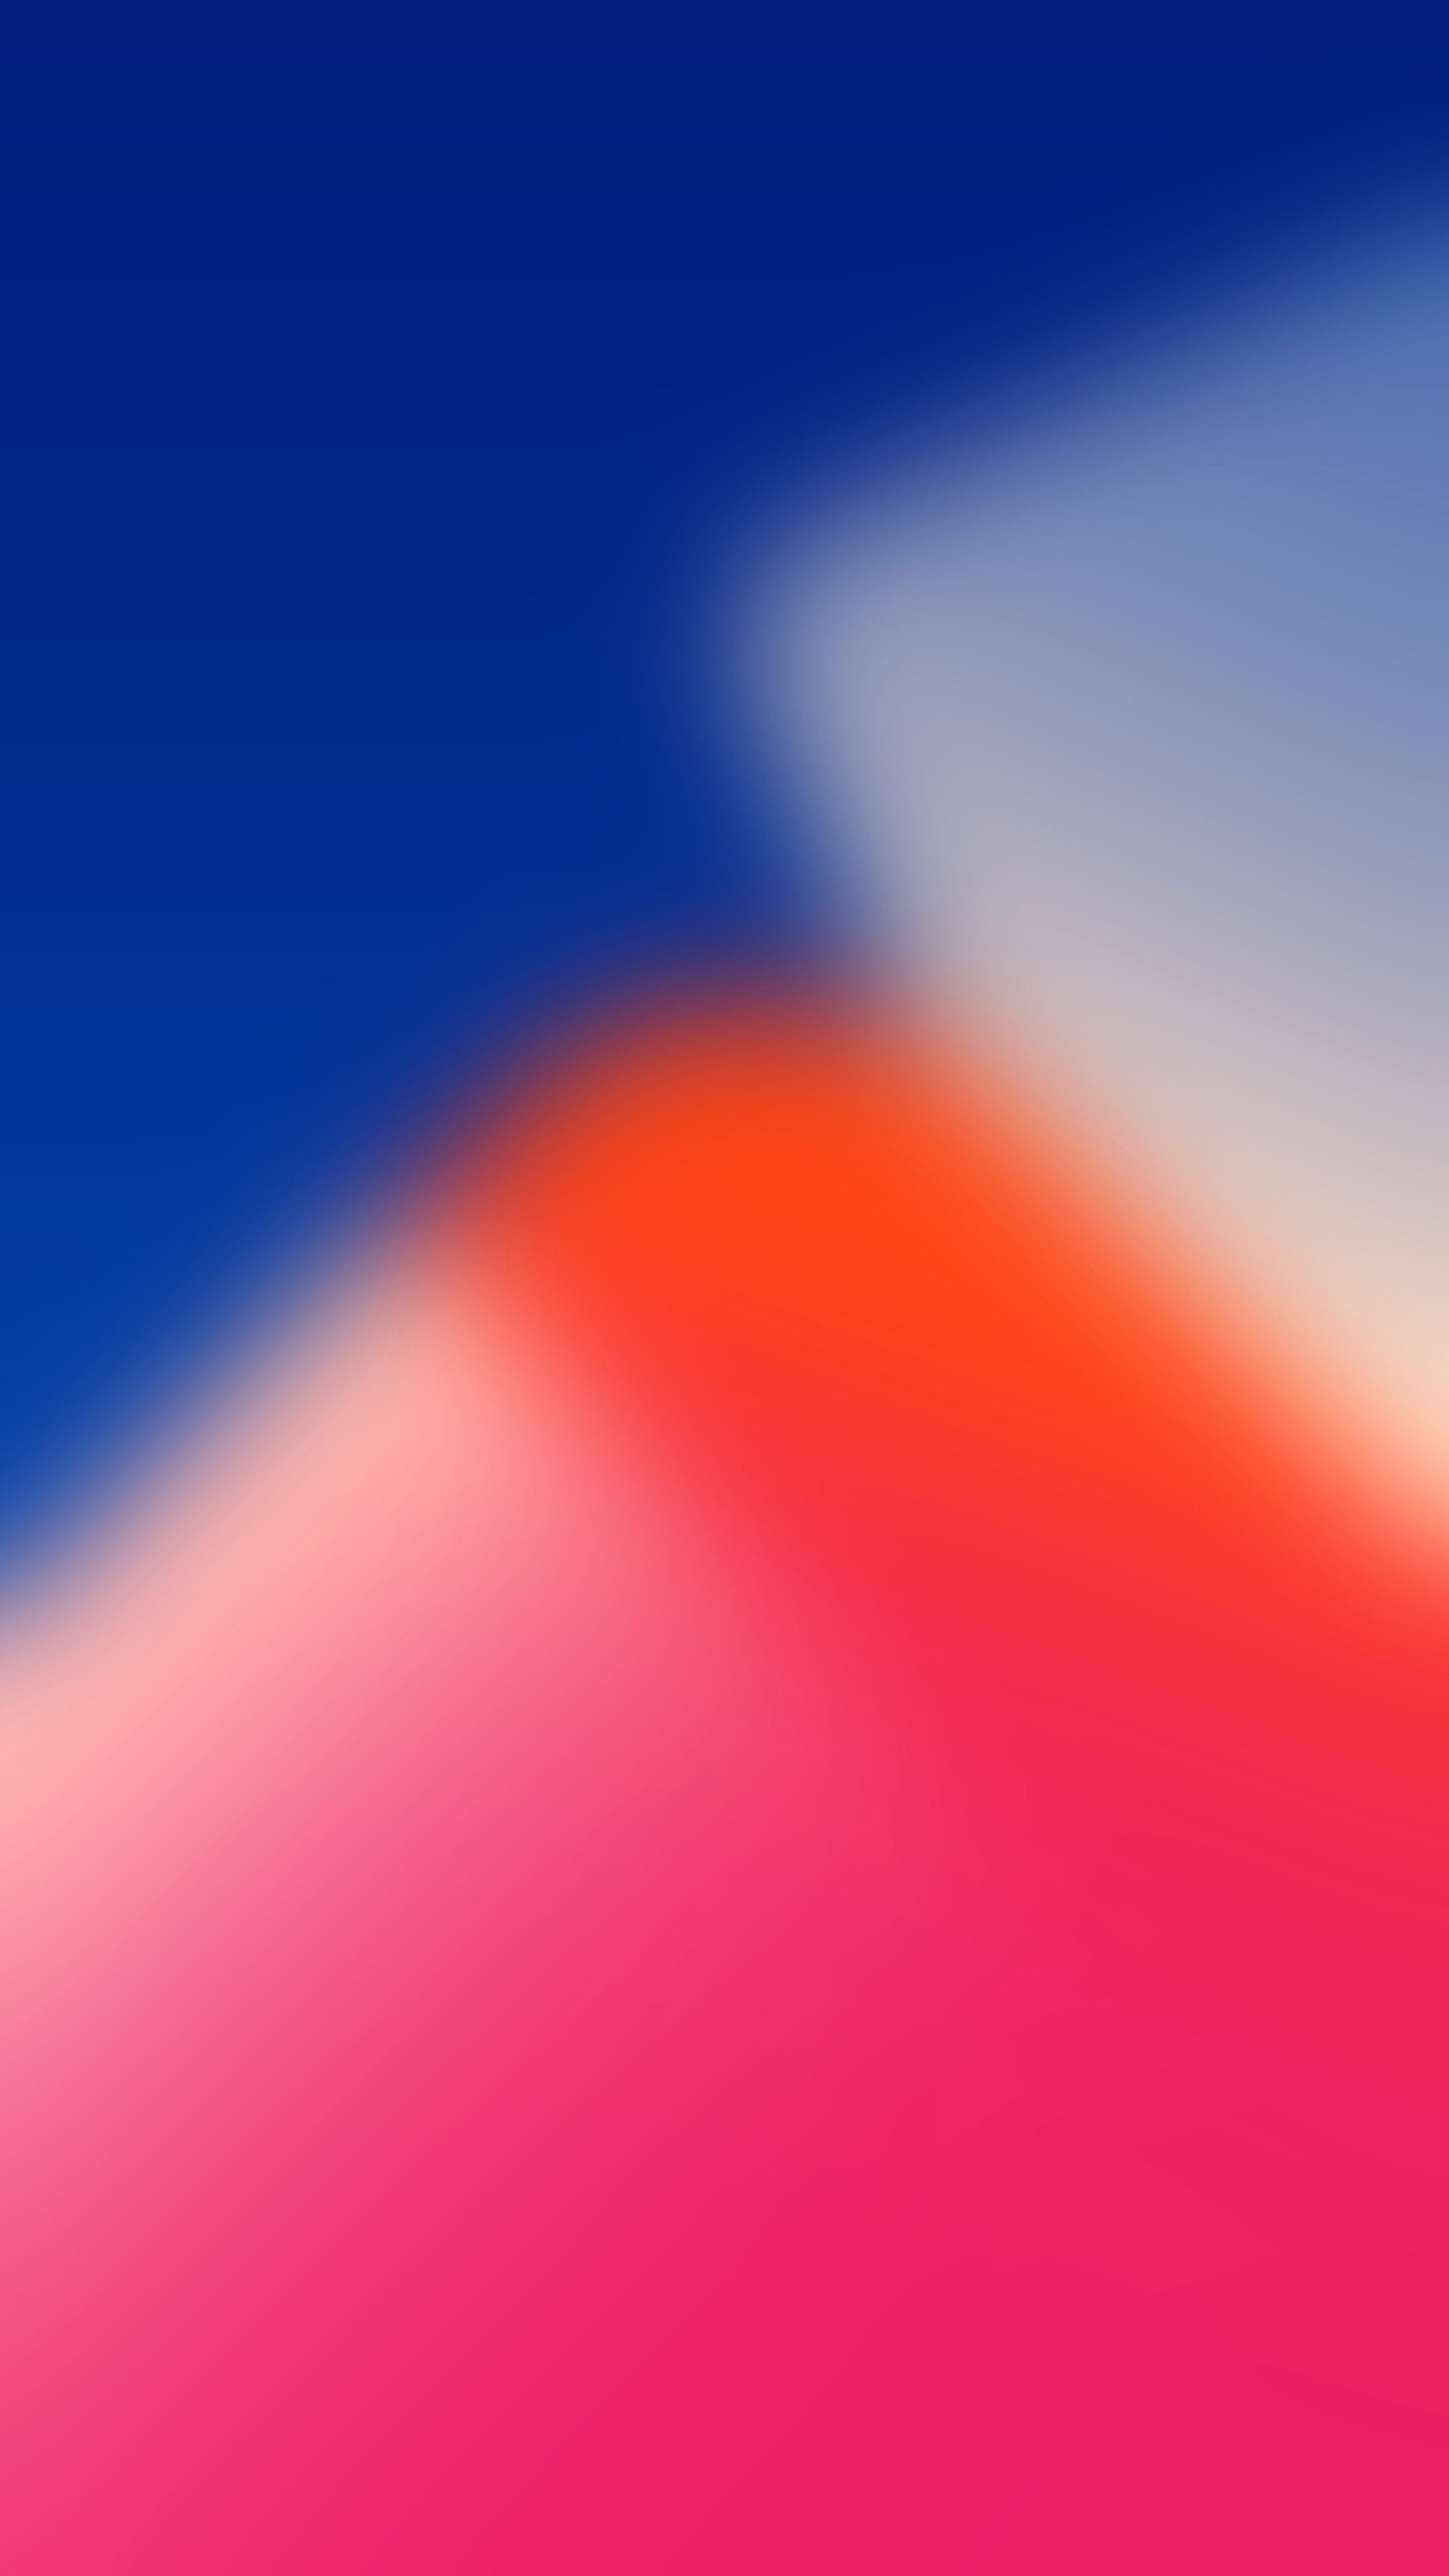 iphone 5s original wallpaper,blue,sky,red,daytime,orange